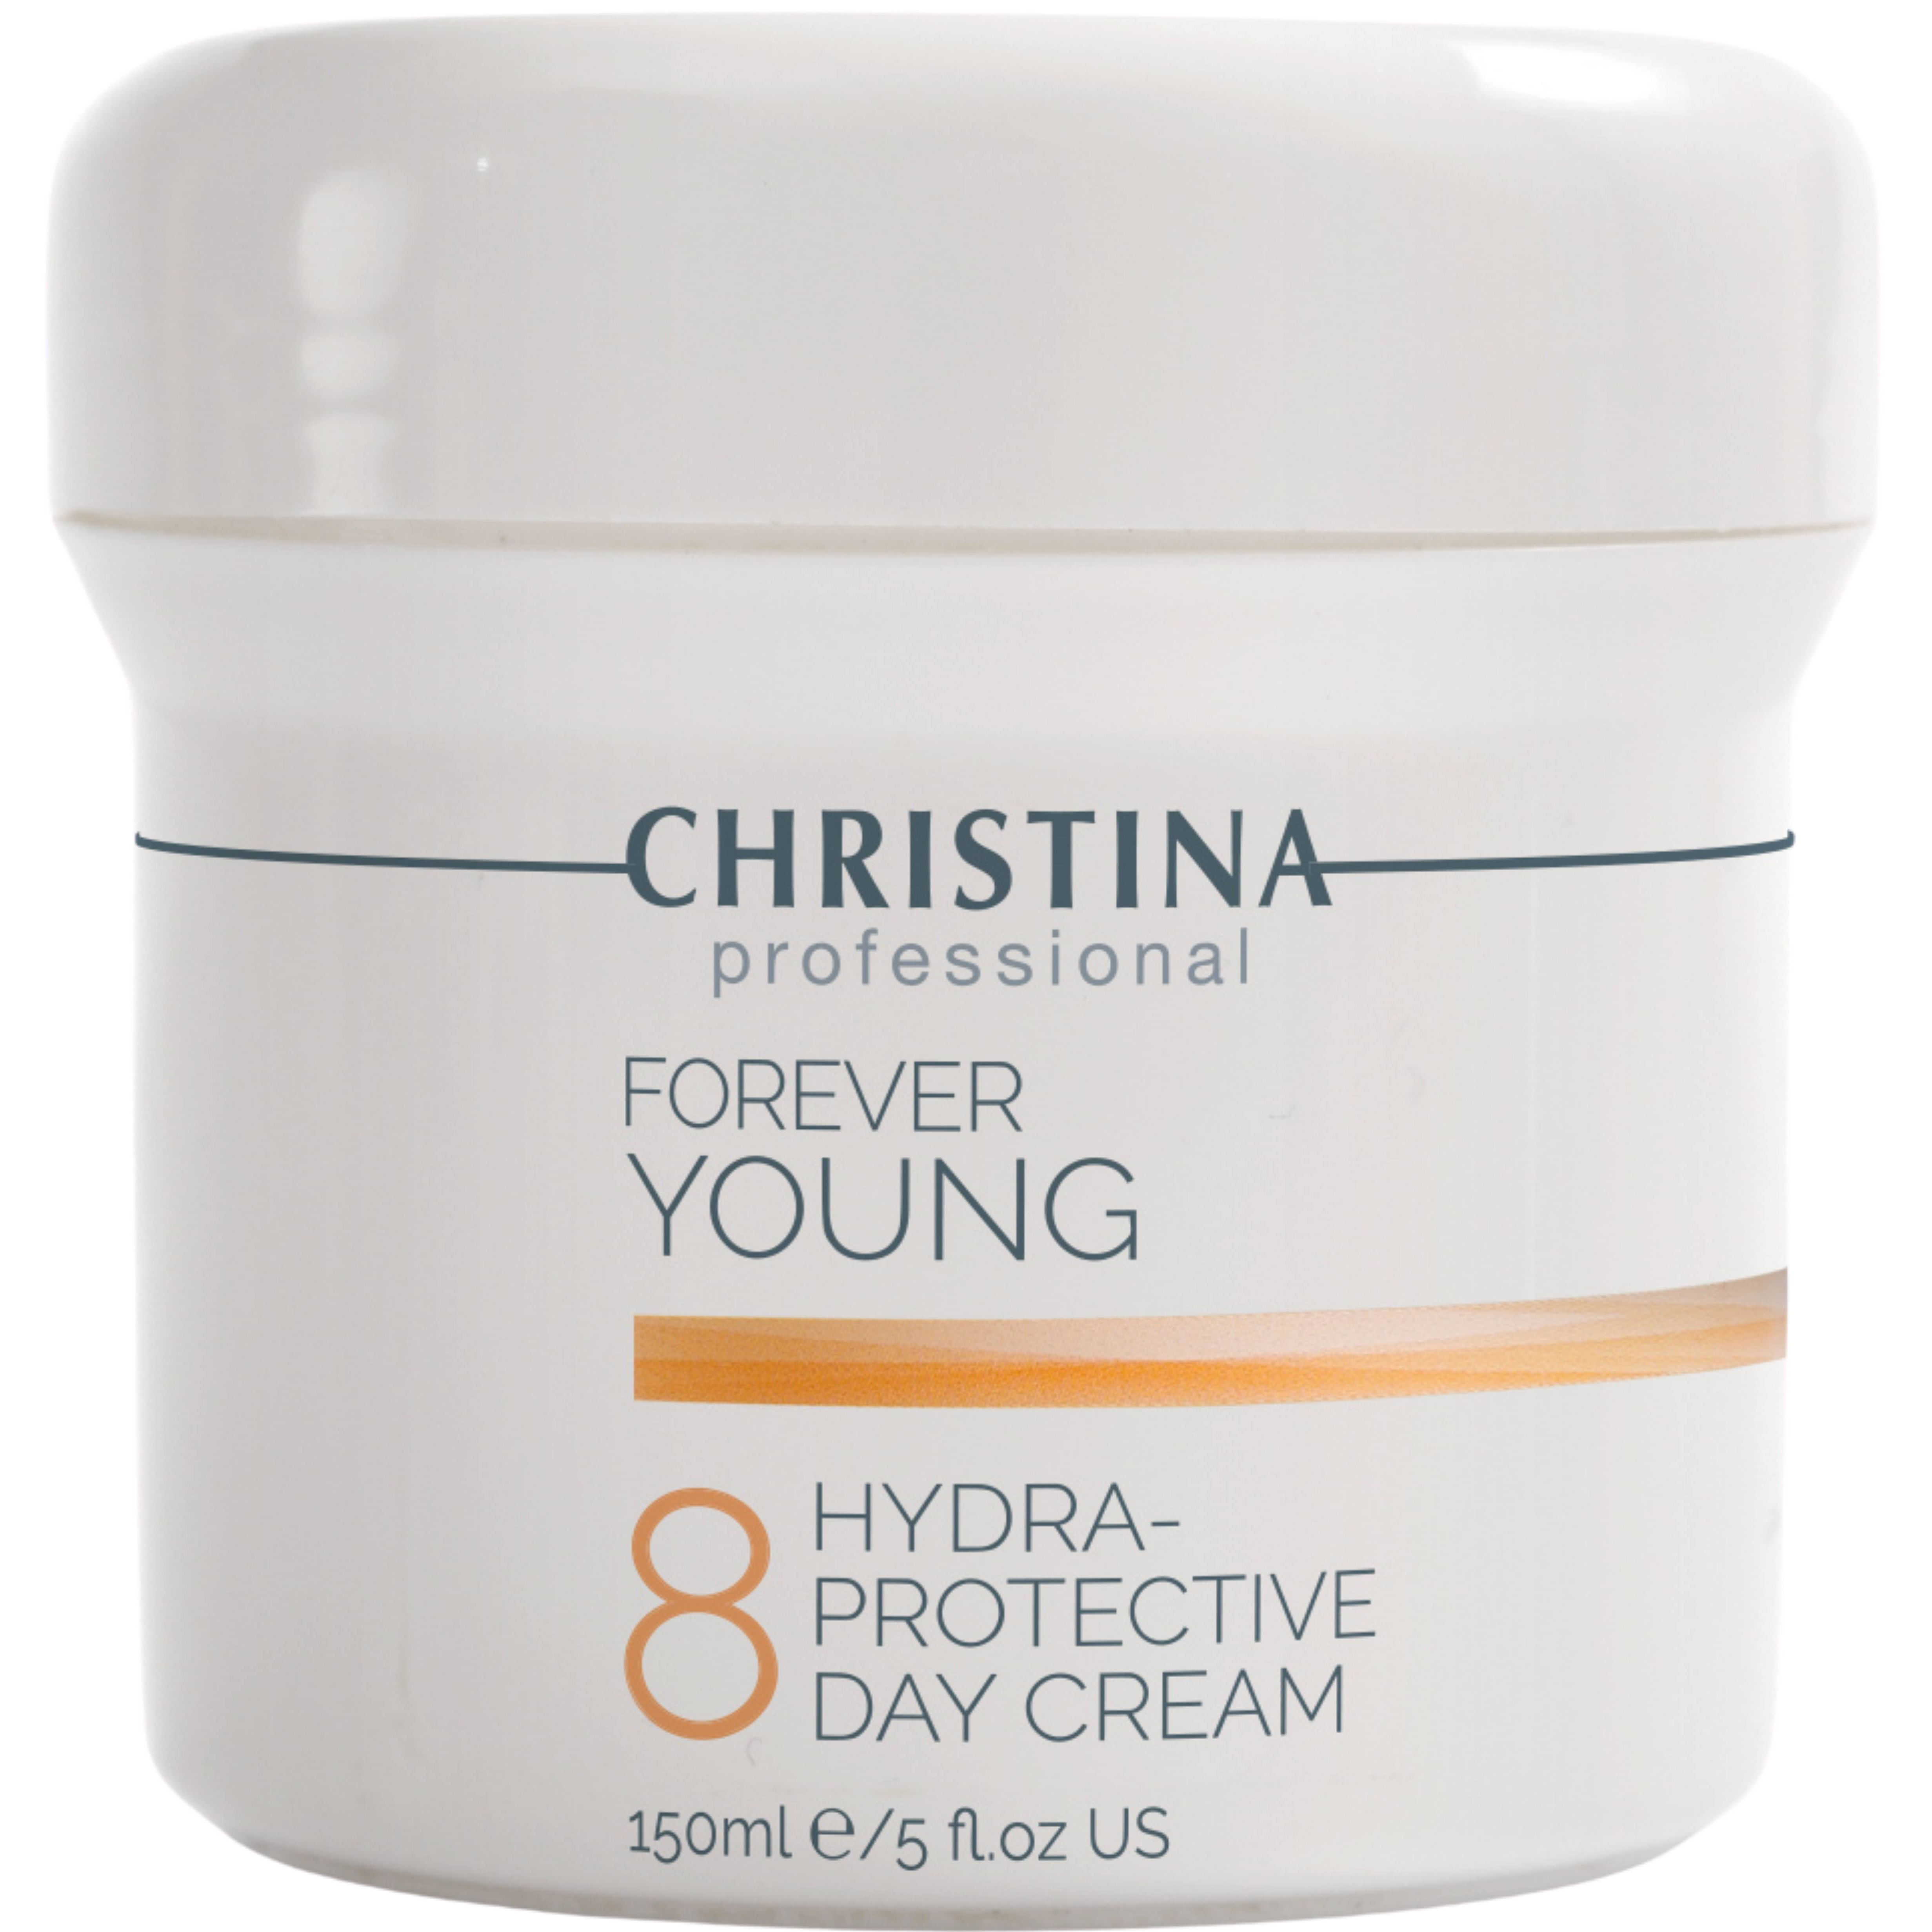 Дневной гидрозащитный крем Christina Forever Young 8 Hydra Protective Day Cream SPF 25 150 мл - фото 1